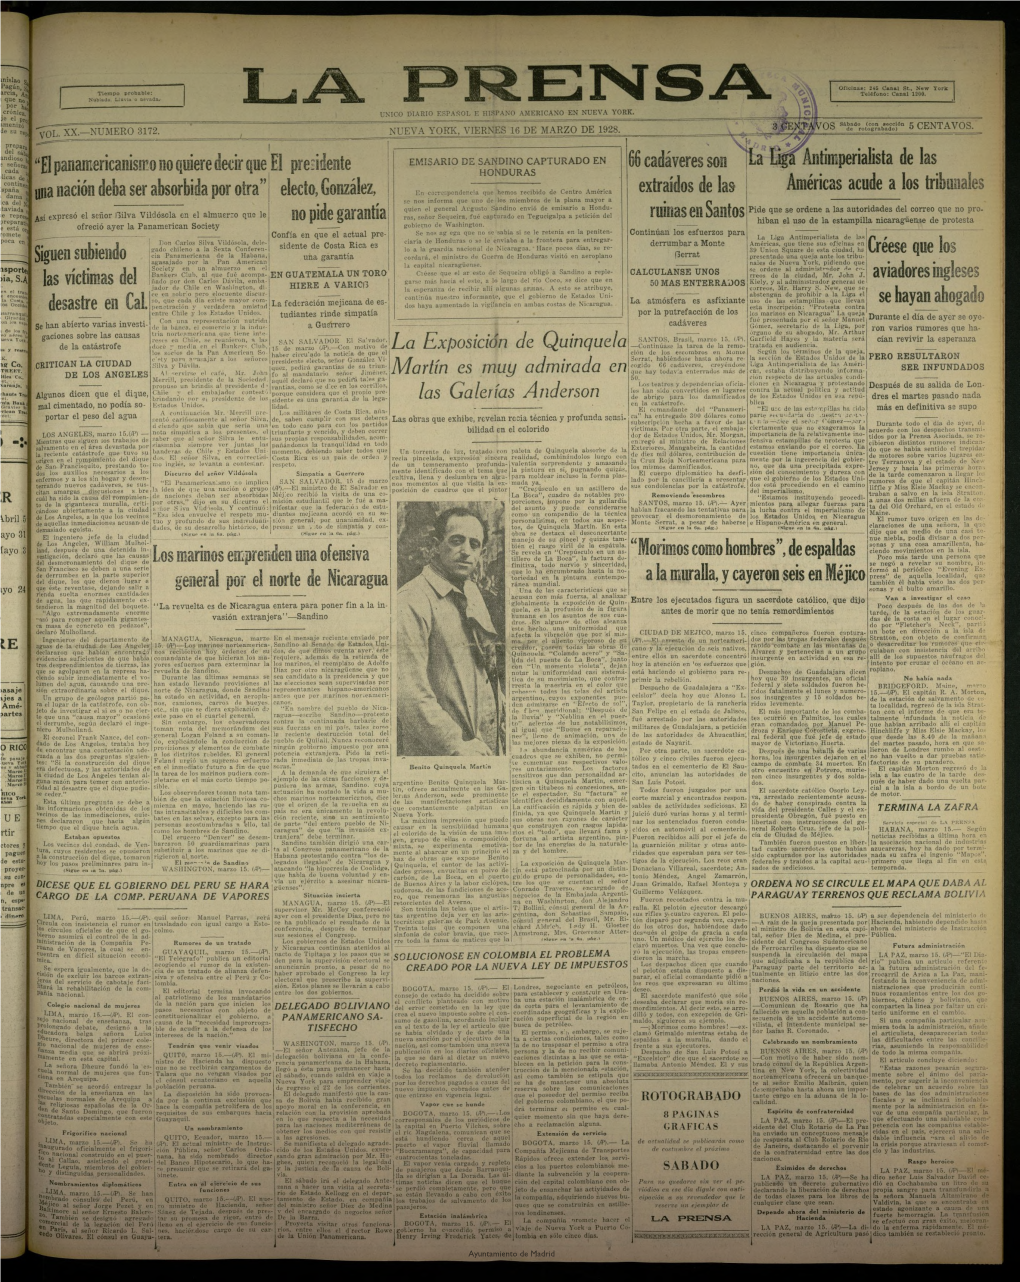 La Prensa, Nueva York, 16 De Marzo De 1928, Nº 3172